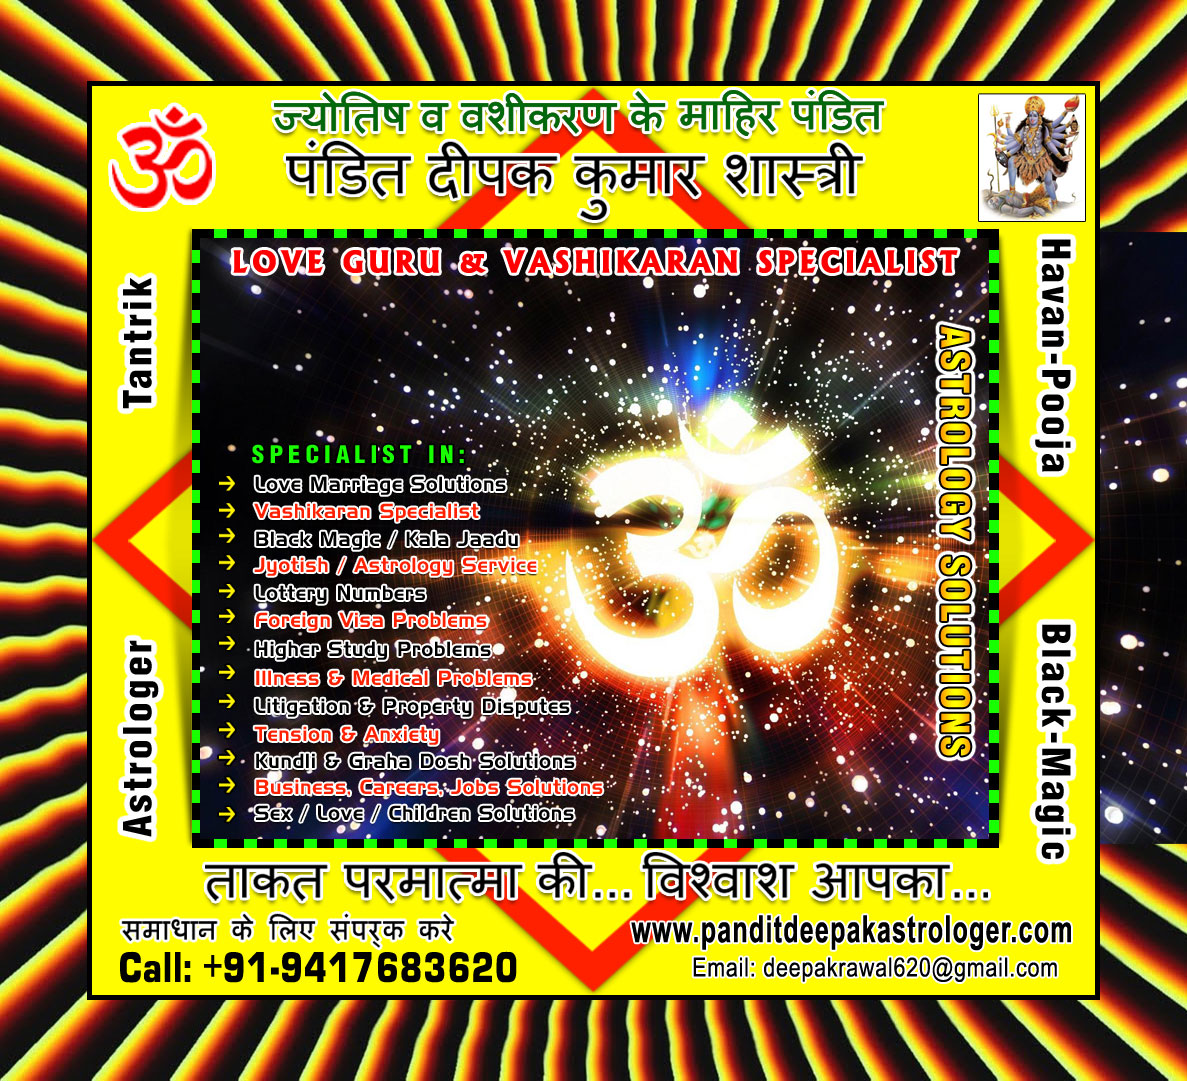 Pandit Deepak Kumar Astrologer,Hoshiarpur,Services,Free Classifieds,Post Free Ads,77traders.com